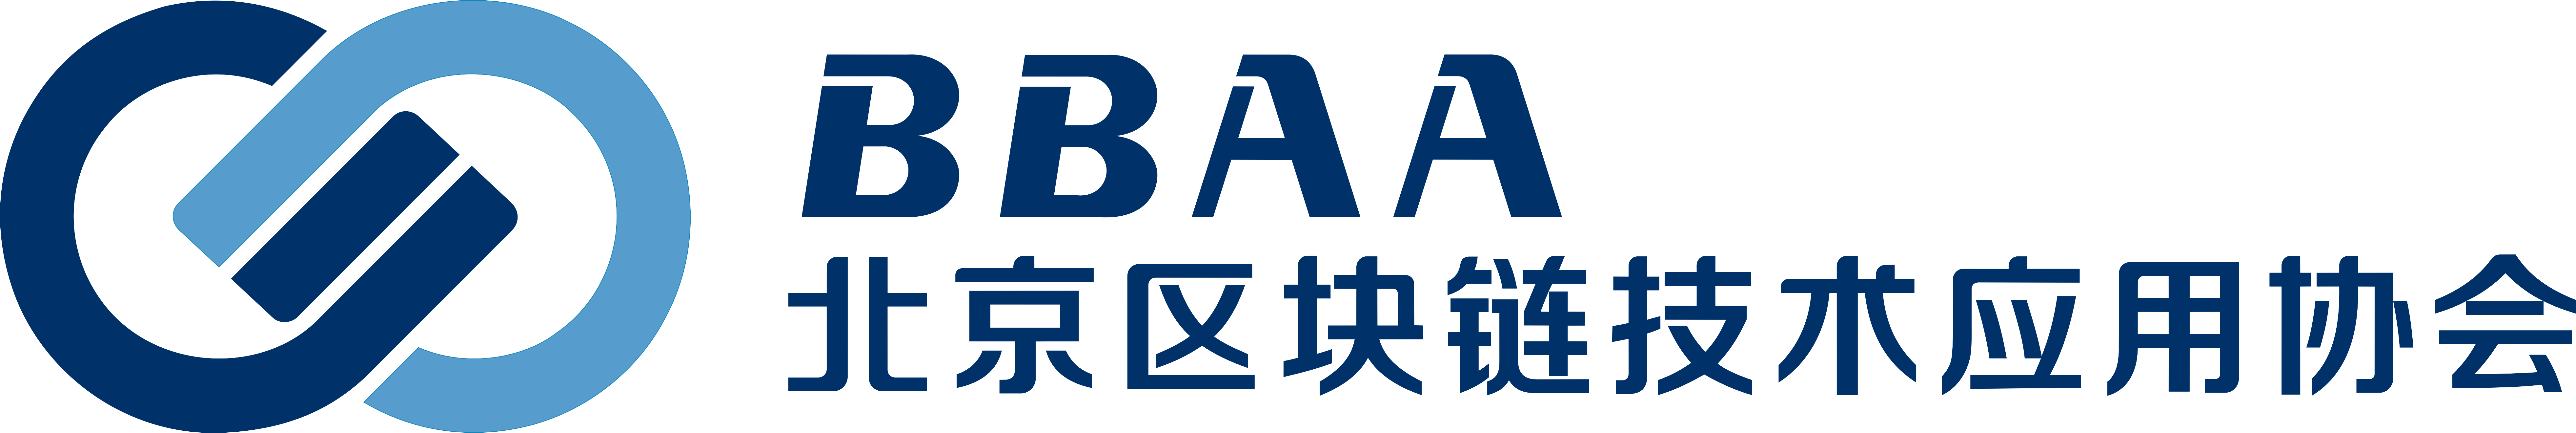 01-logo+BBAA+中文.png